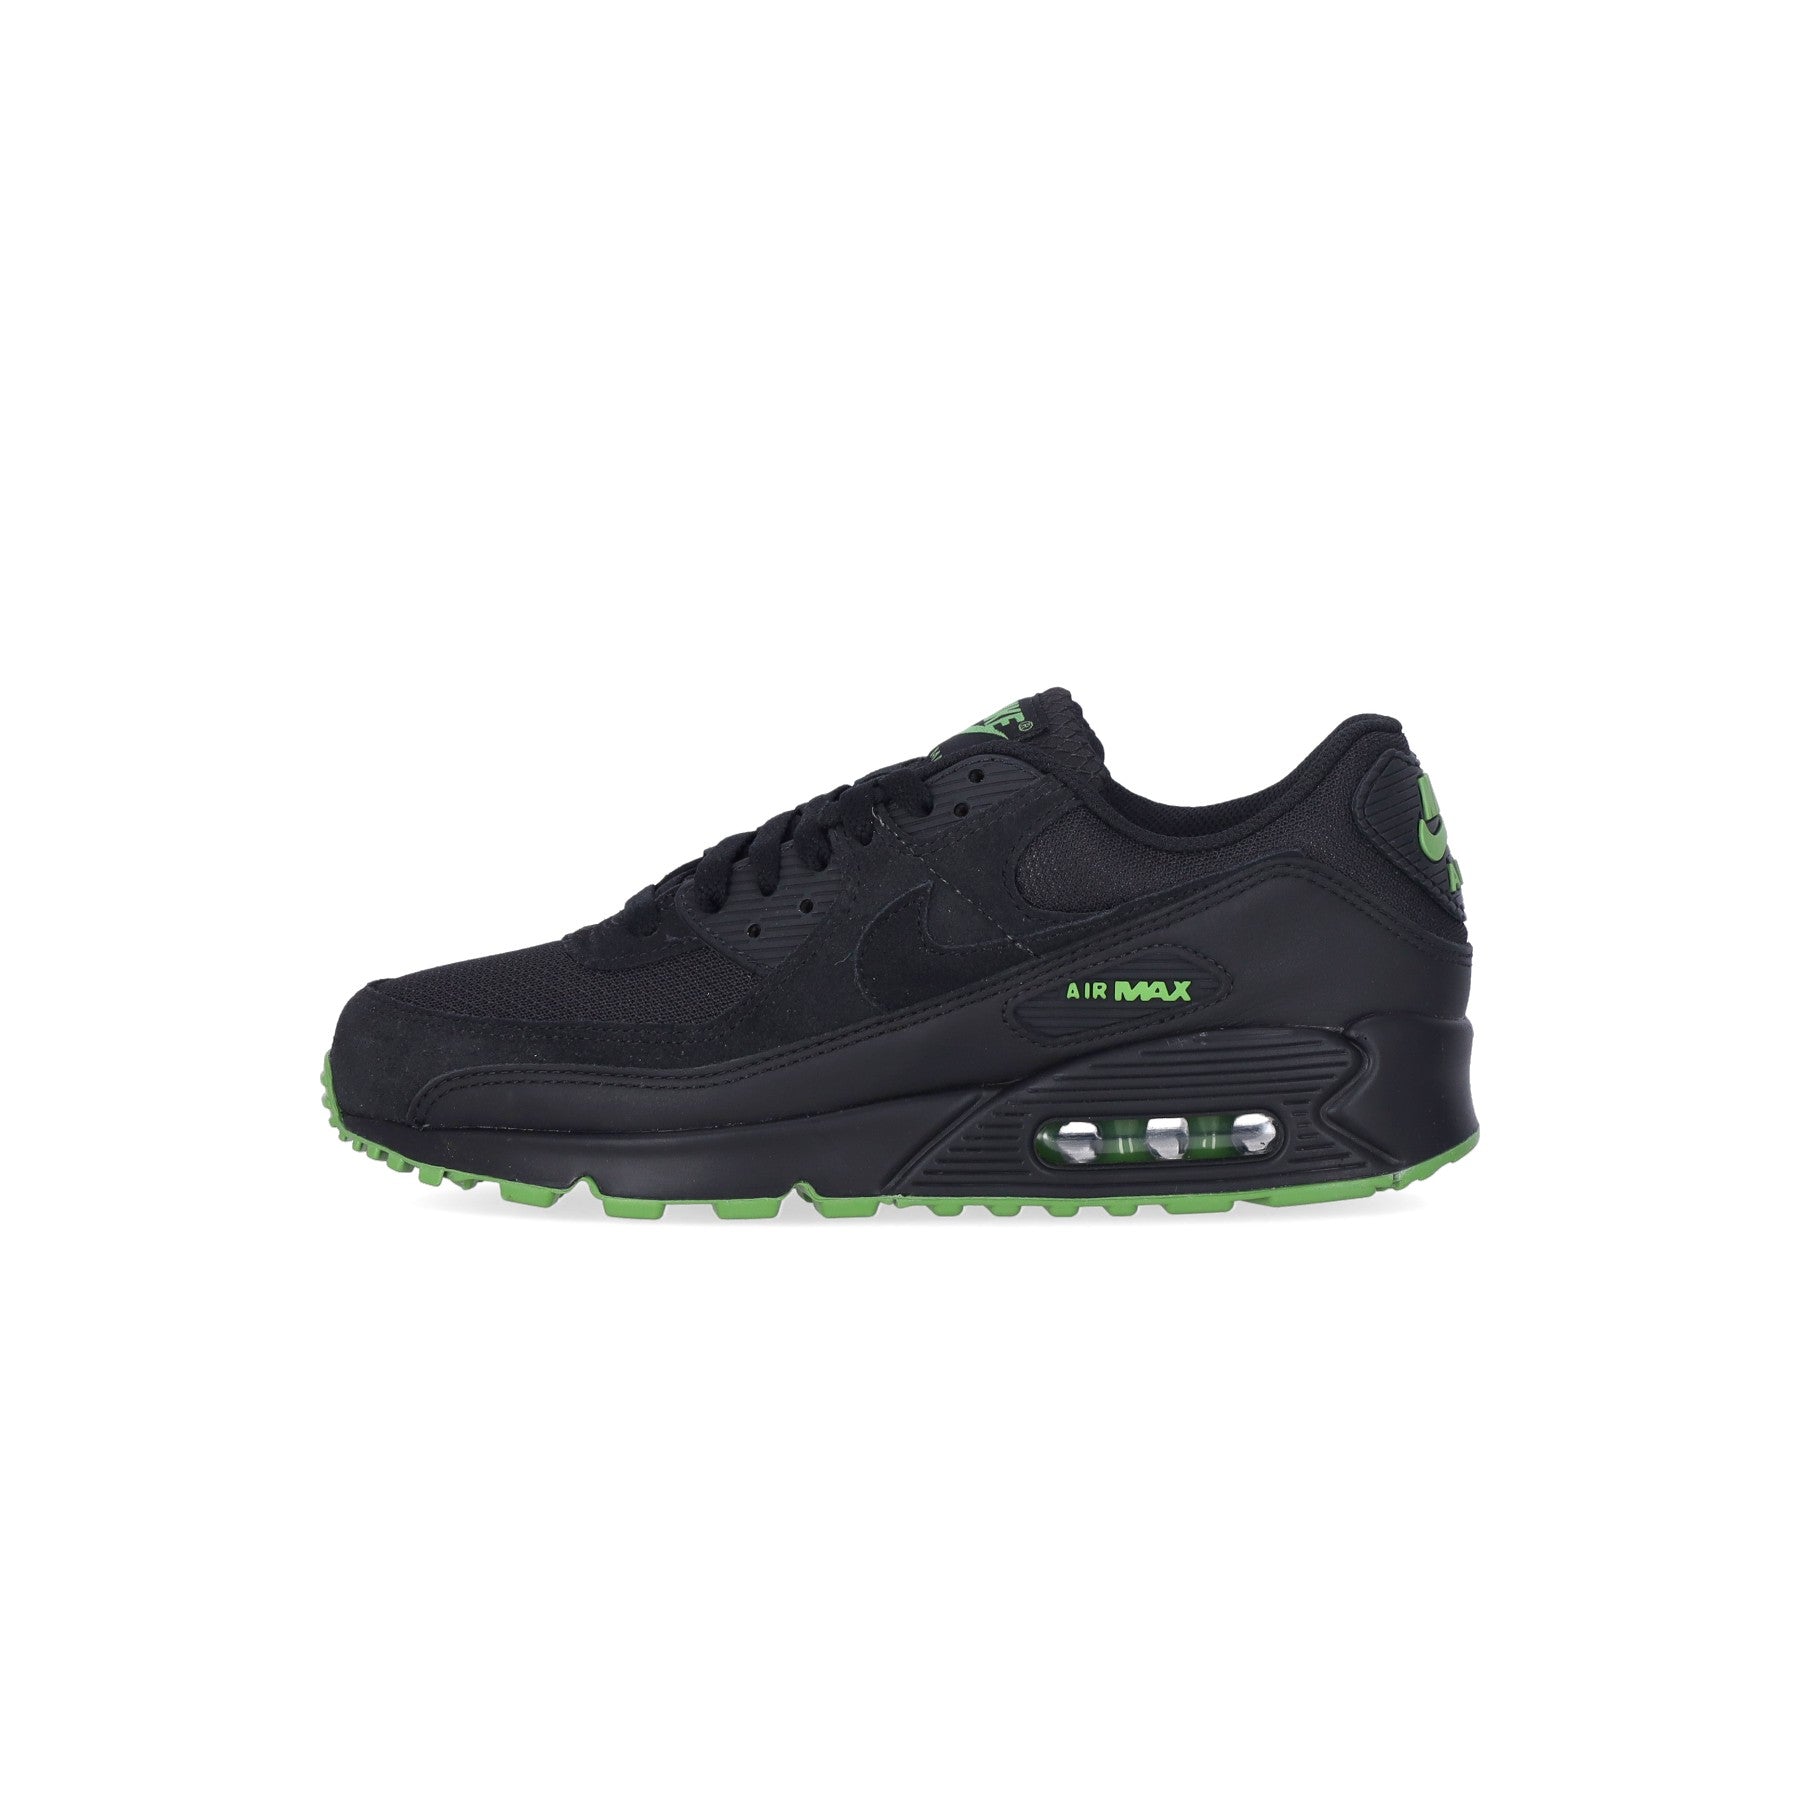 Nike, Scarpa Bassa Uomo Air Max 90, Black/black/chlorophyll